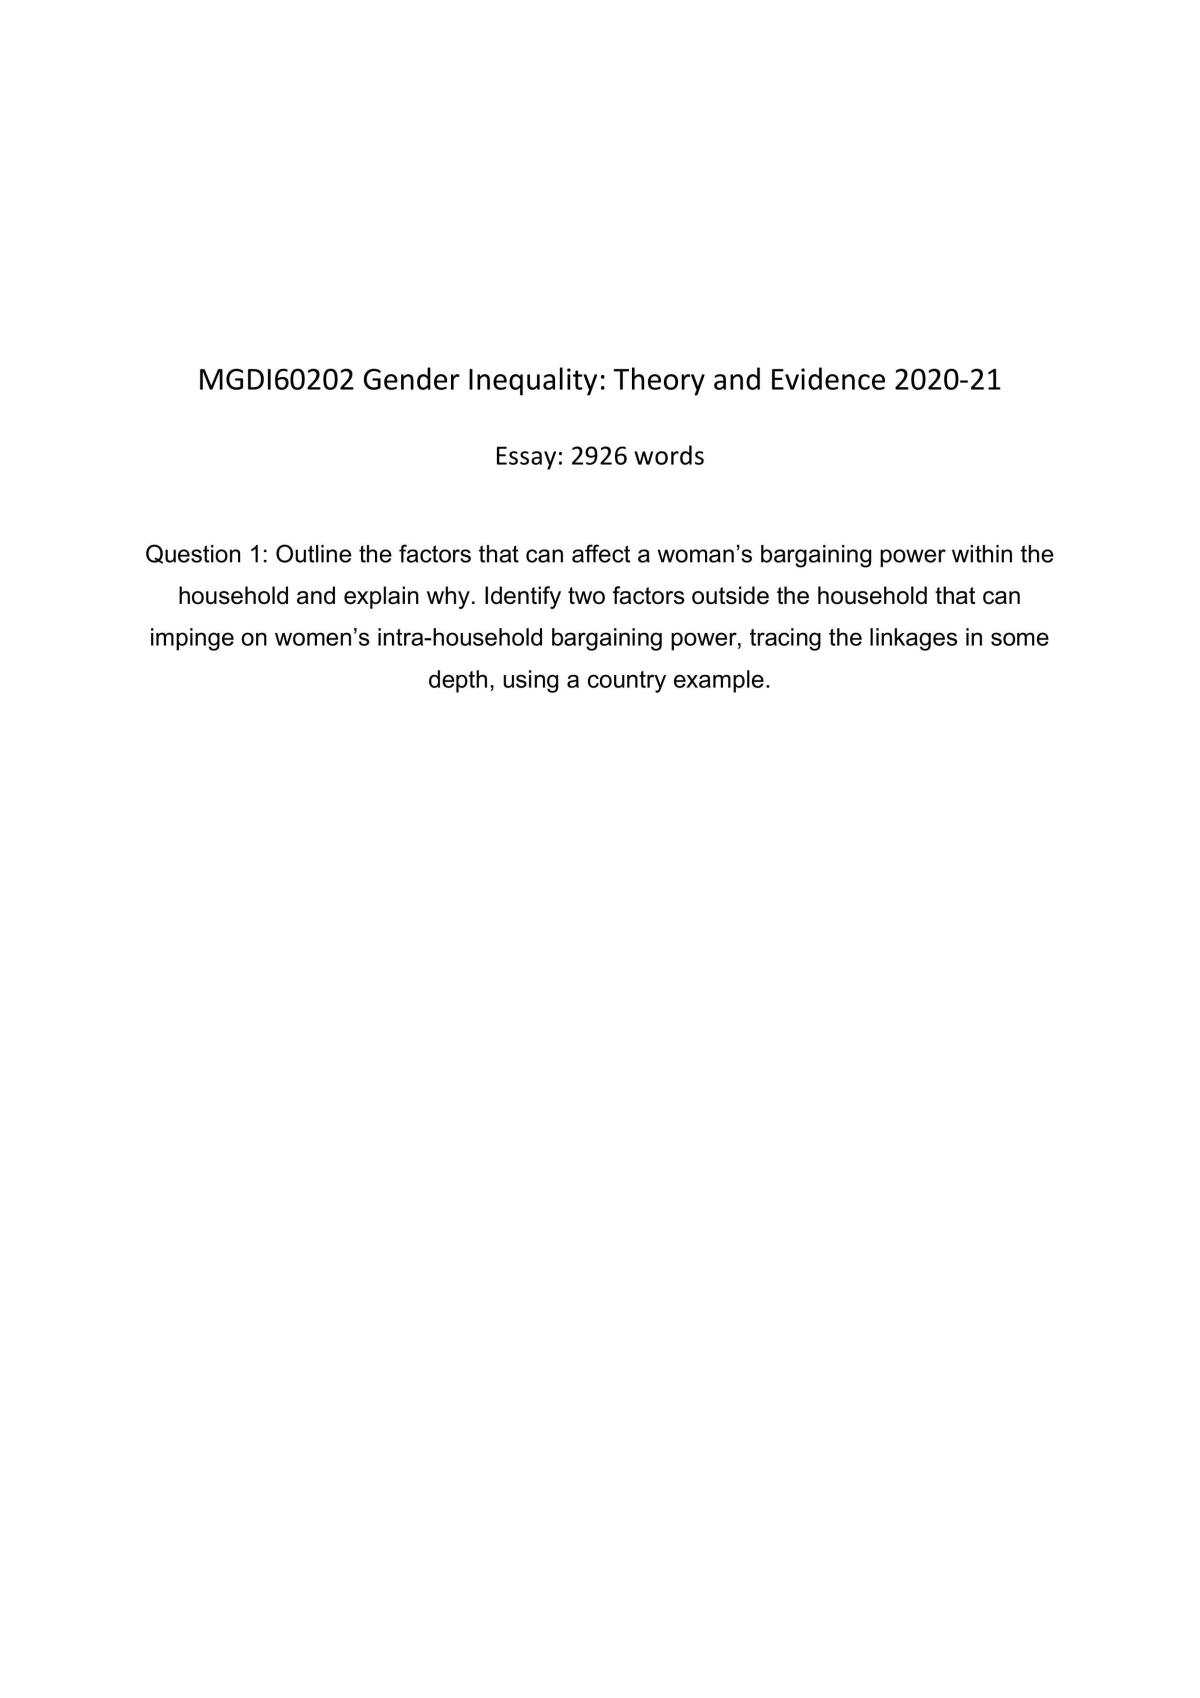 gender inequality essay titles